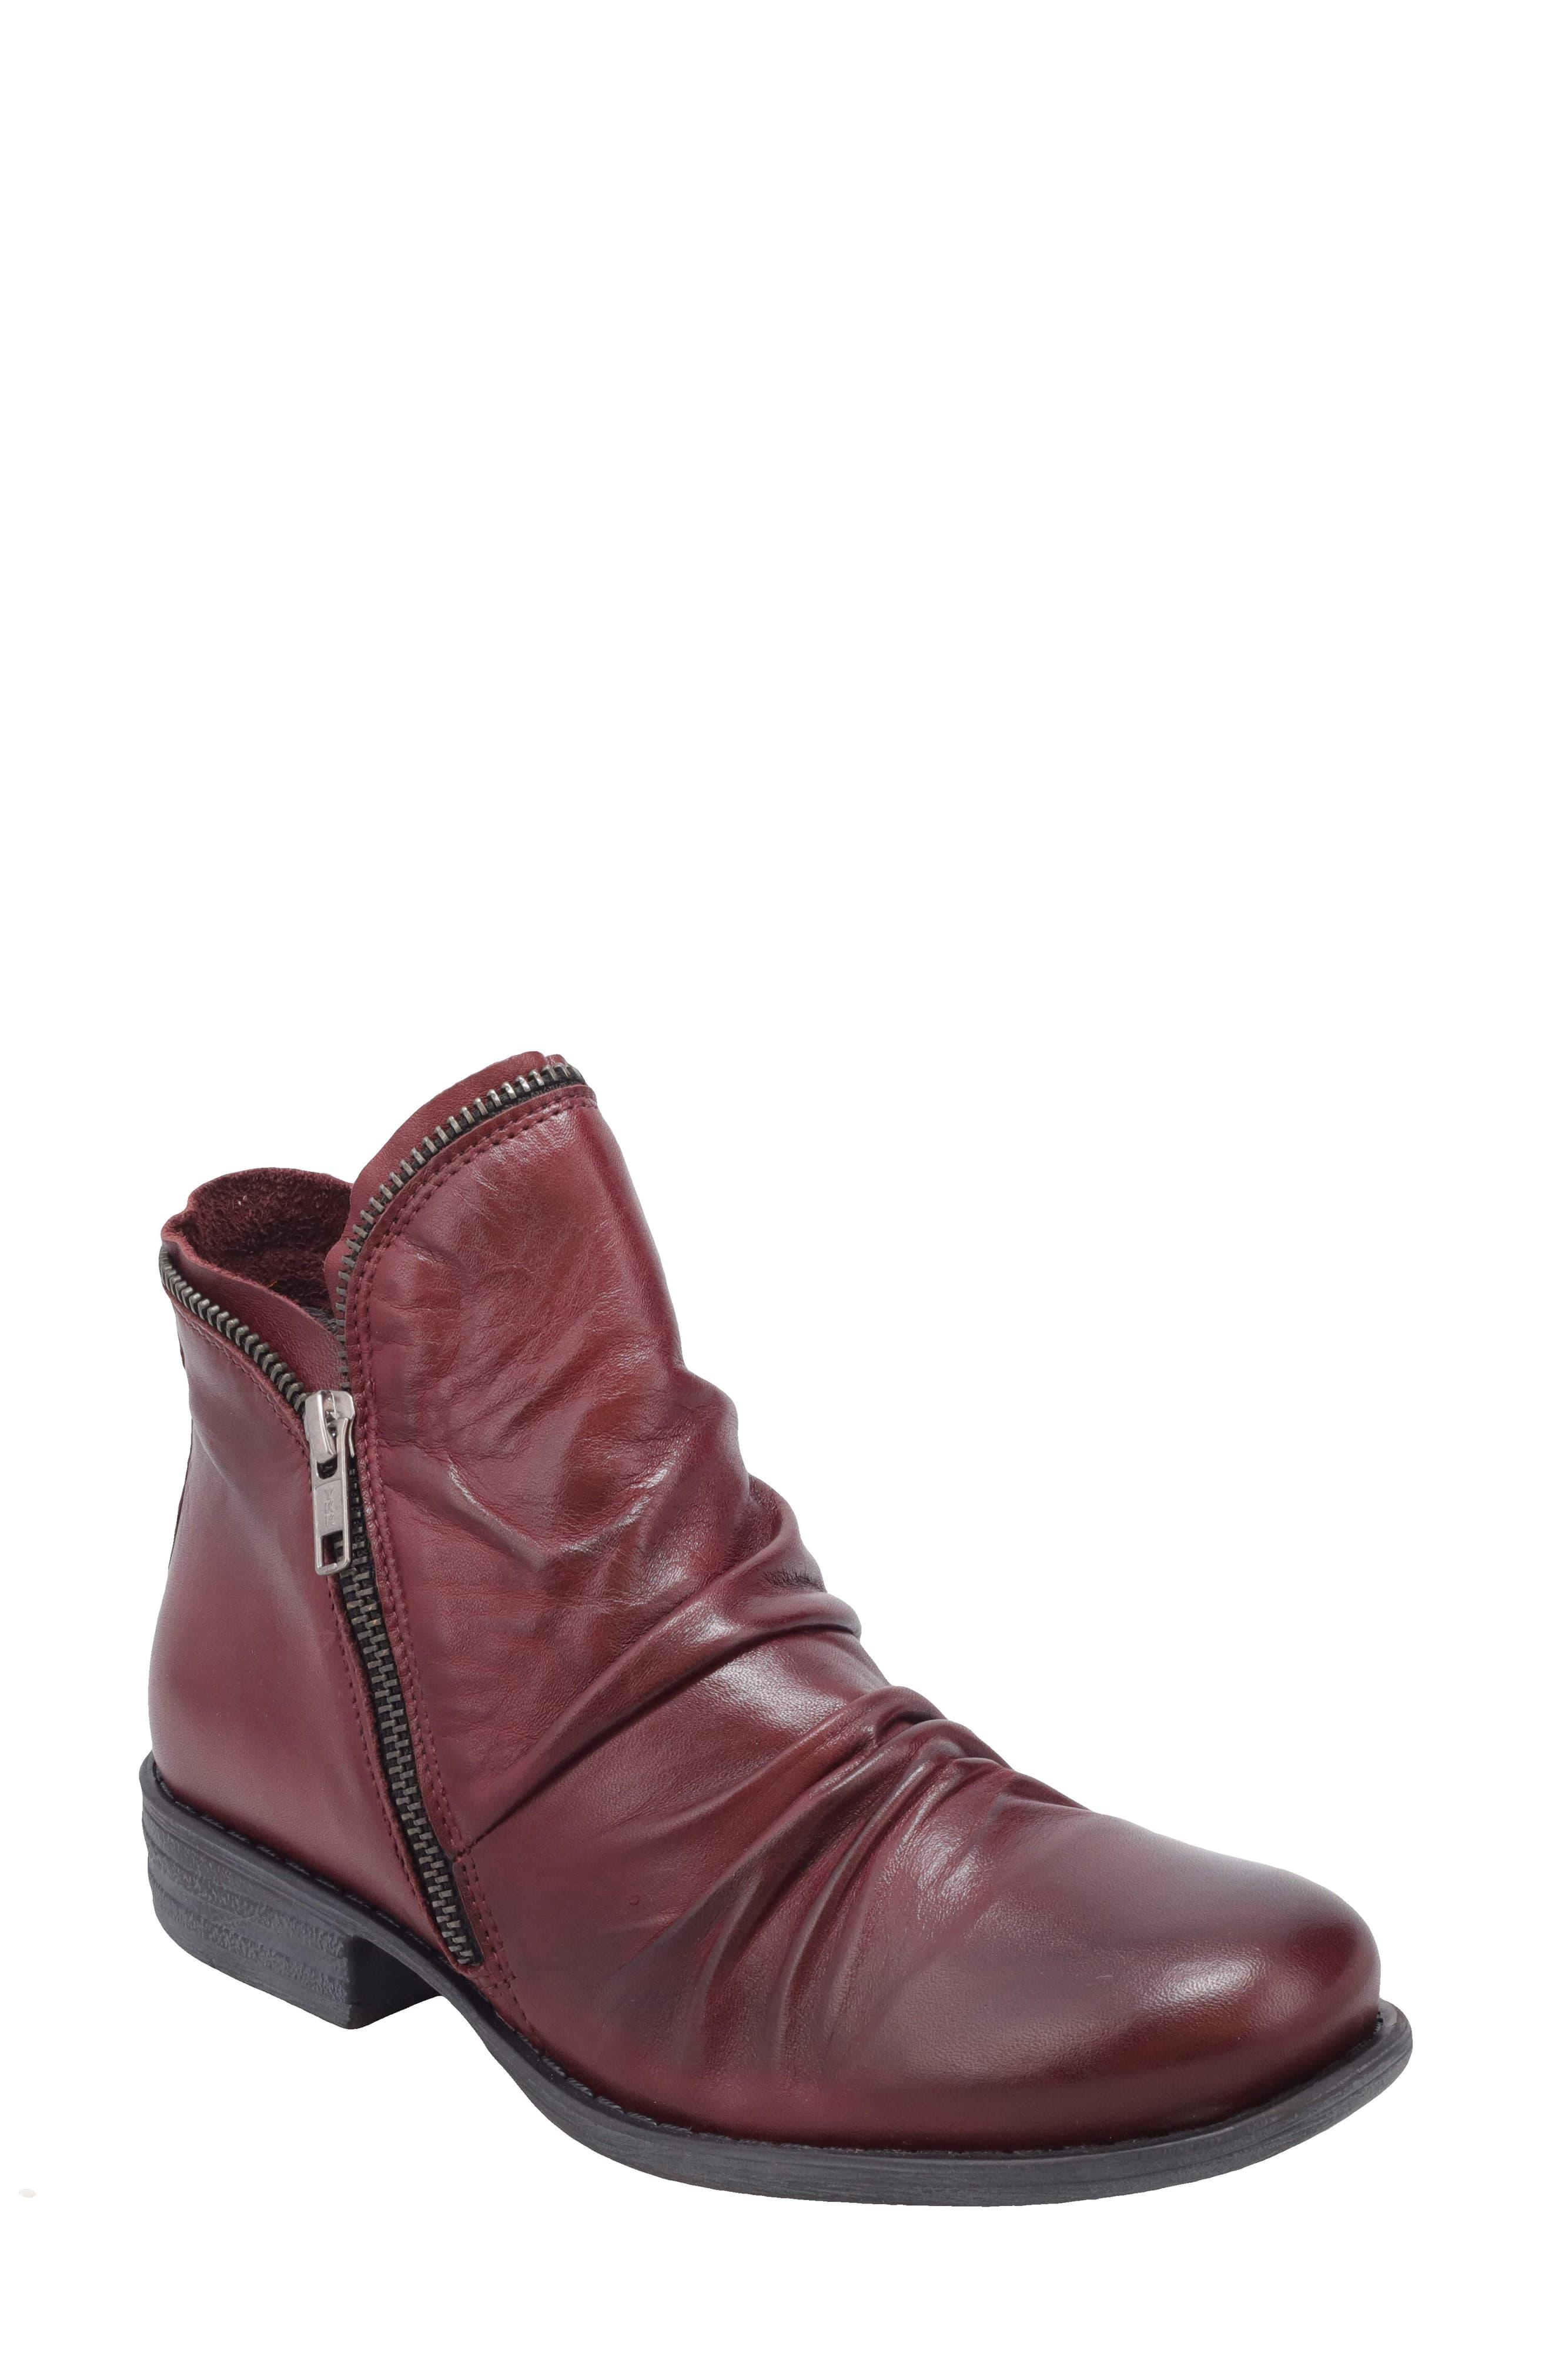 Miz Mooz Leather 'luna' Ankle Boot in Brown - Lyst